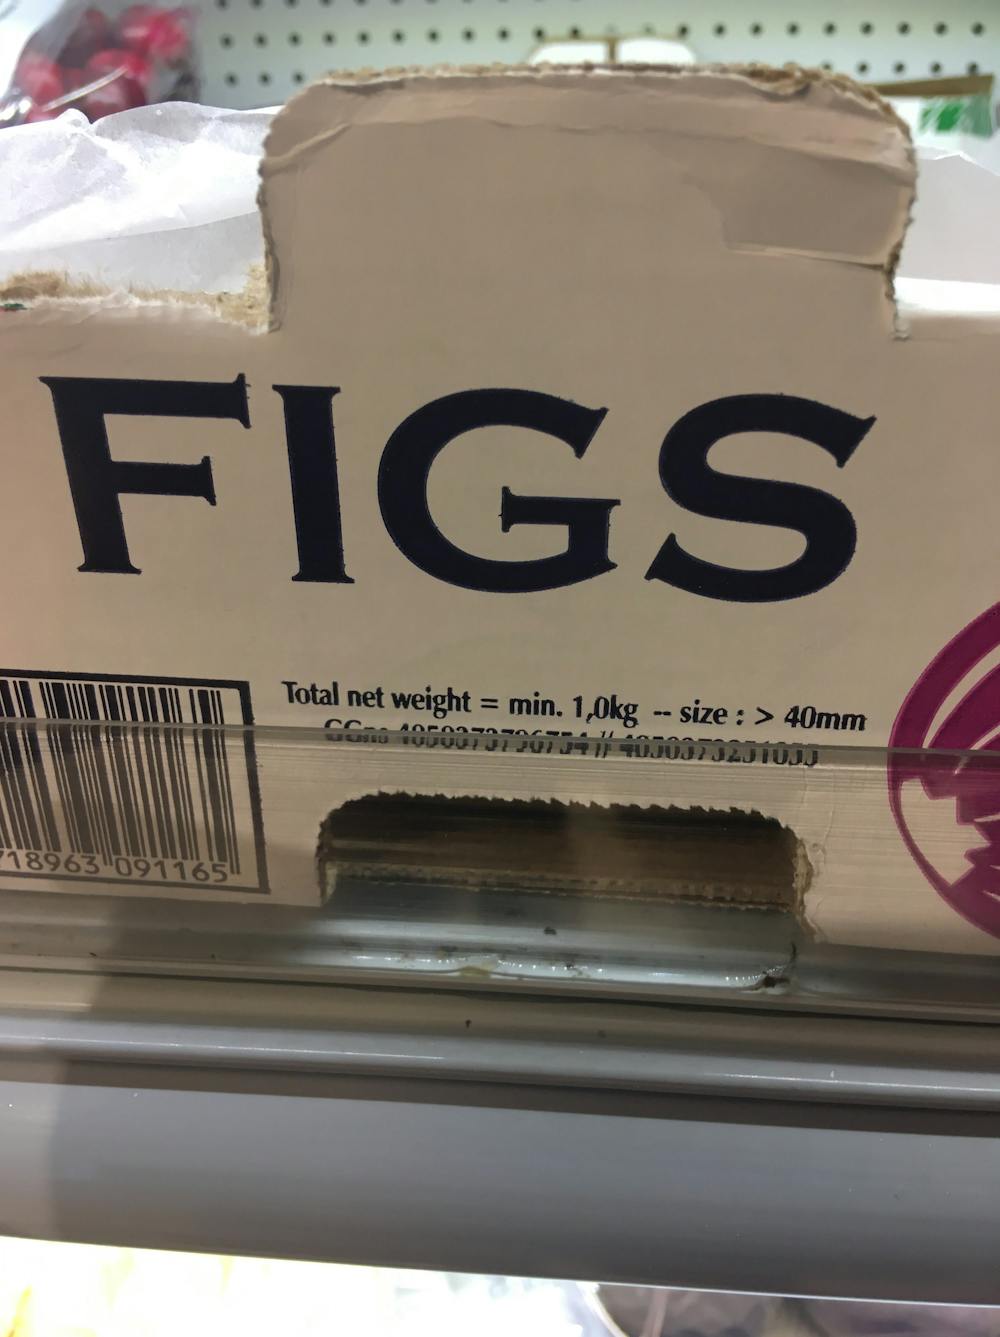 Ingredienslisten til  Figs